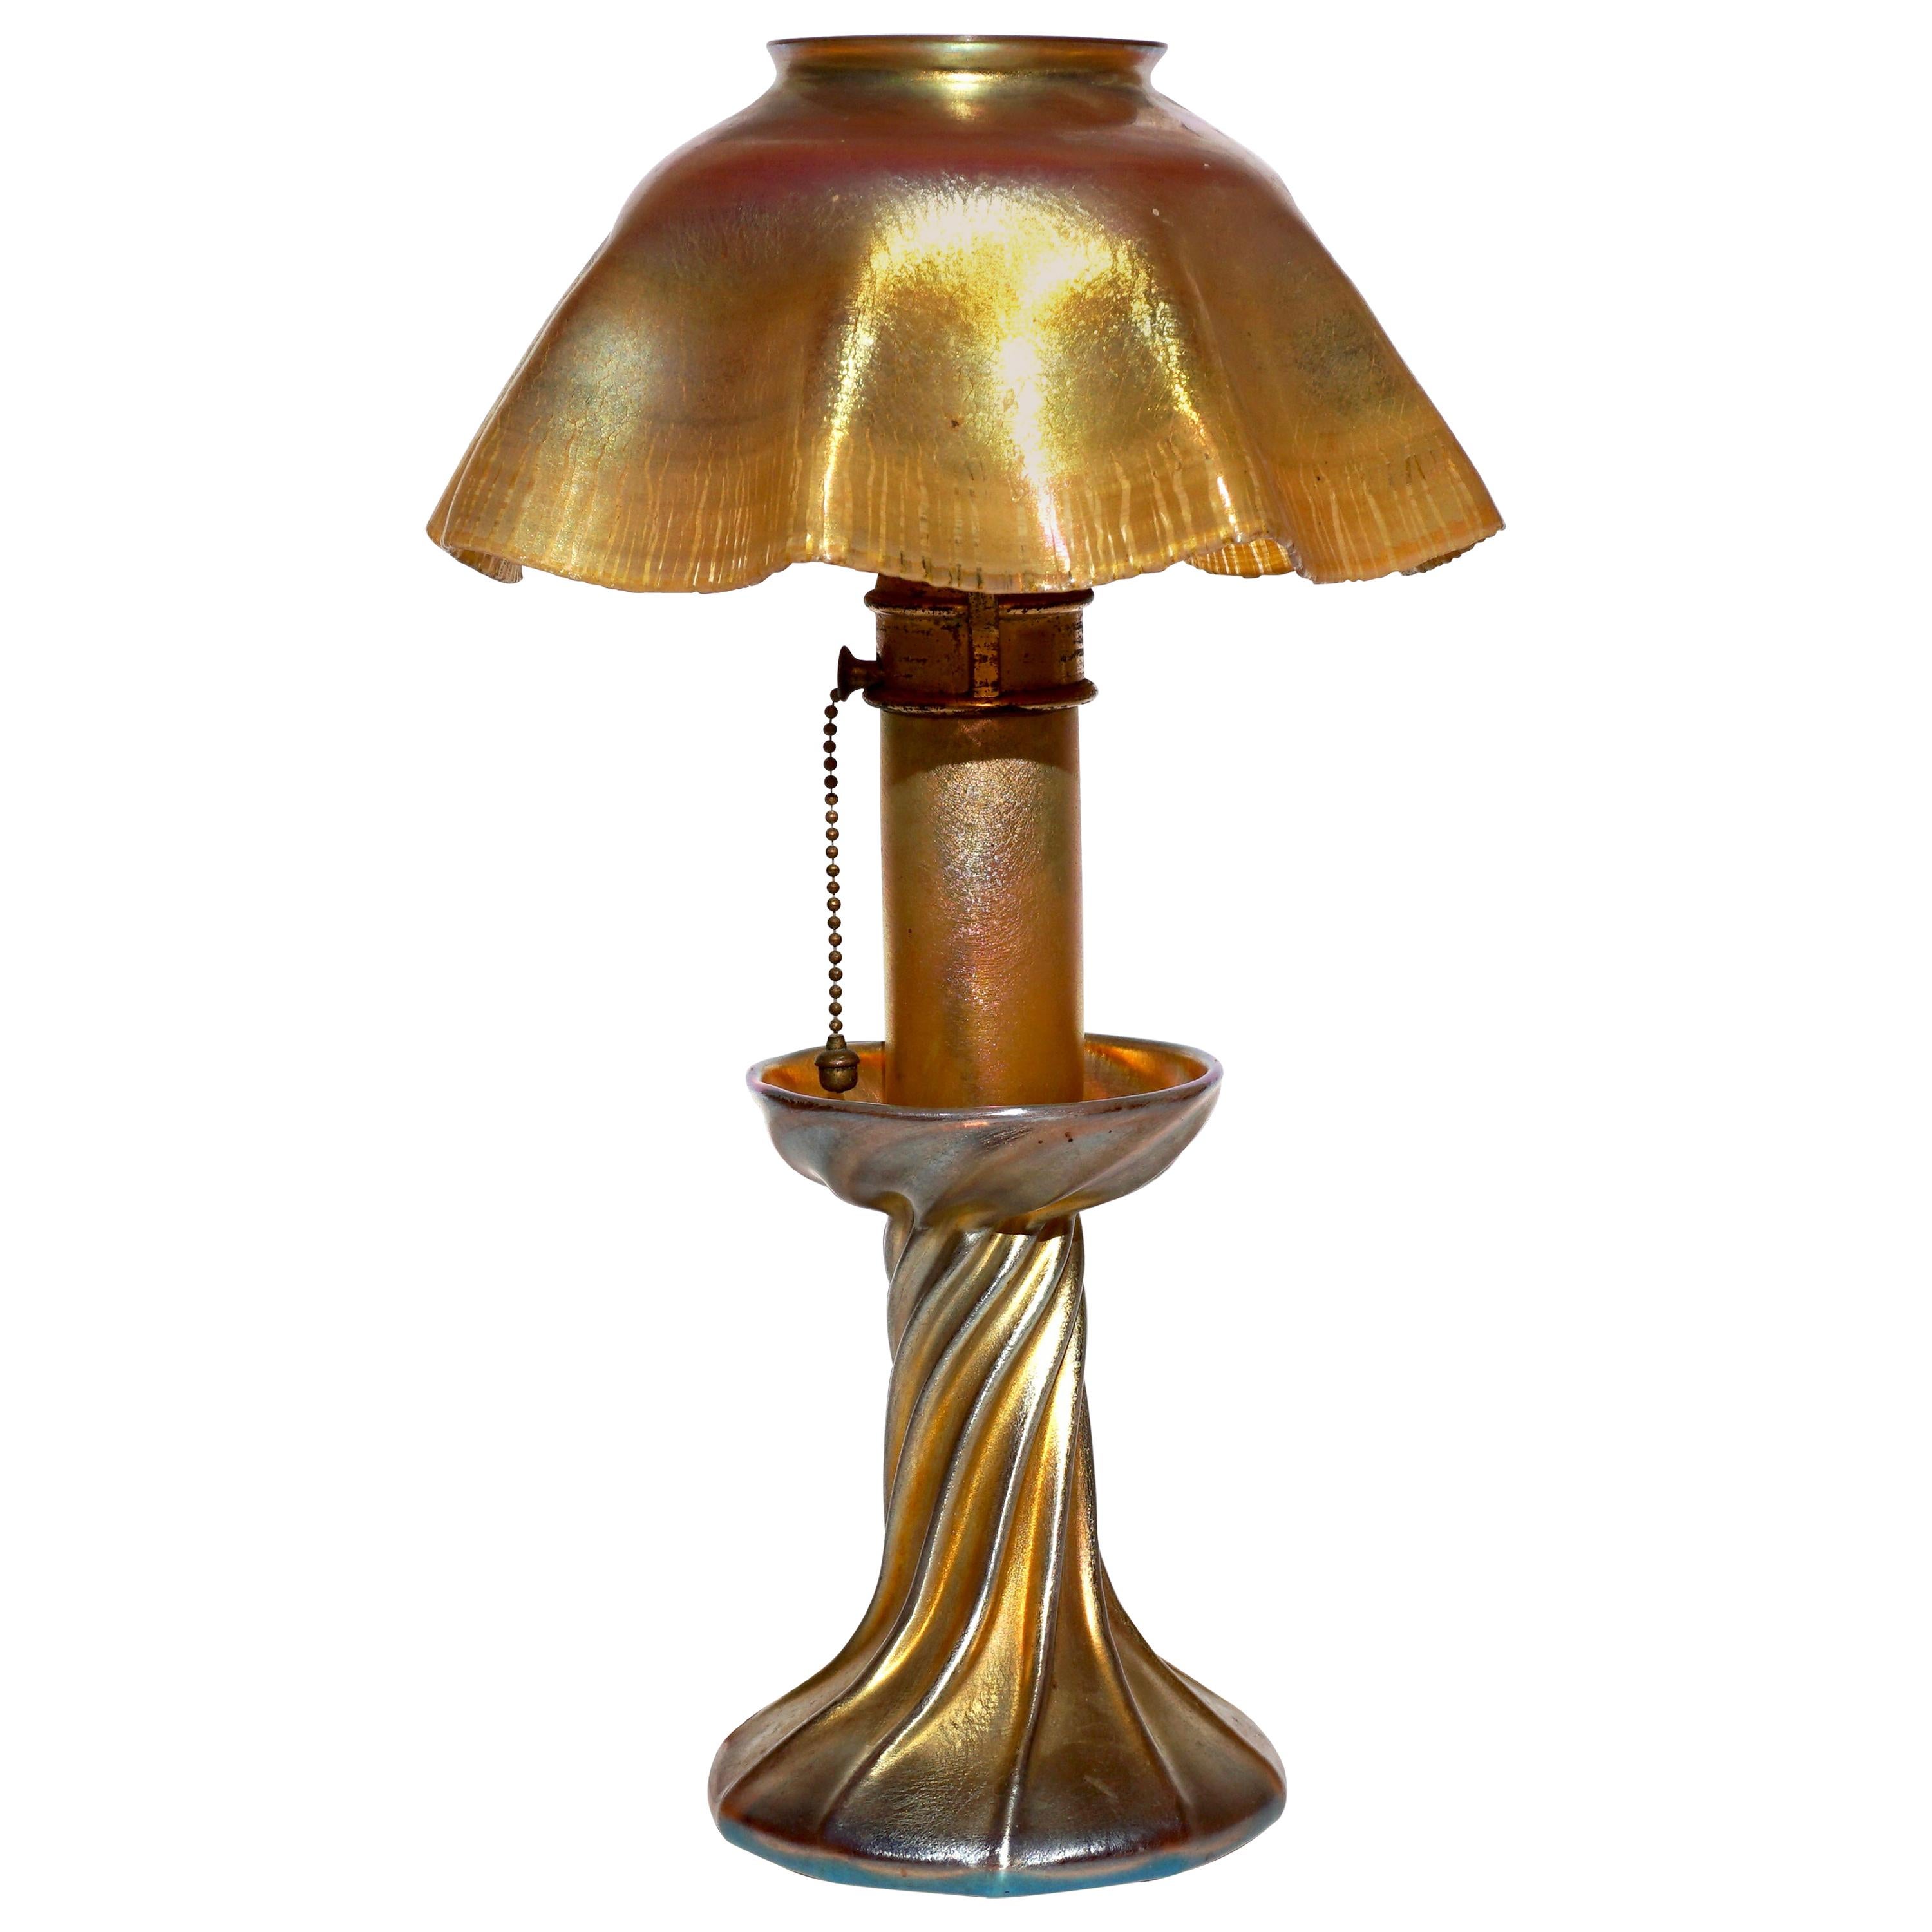 L.C.T. Tiffany Favrile Candle Lamp